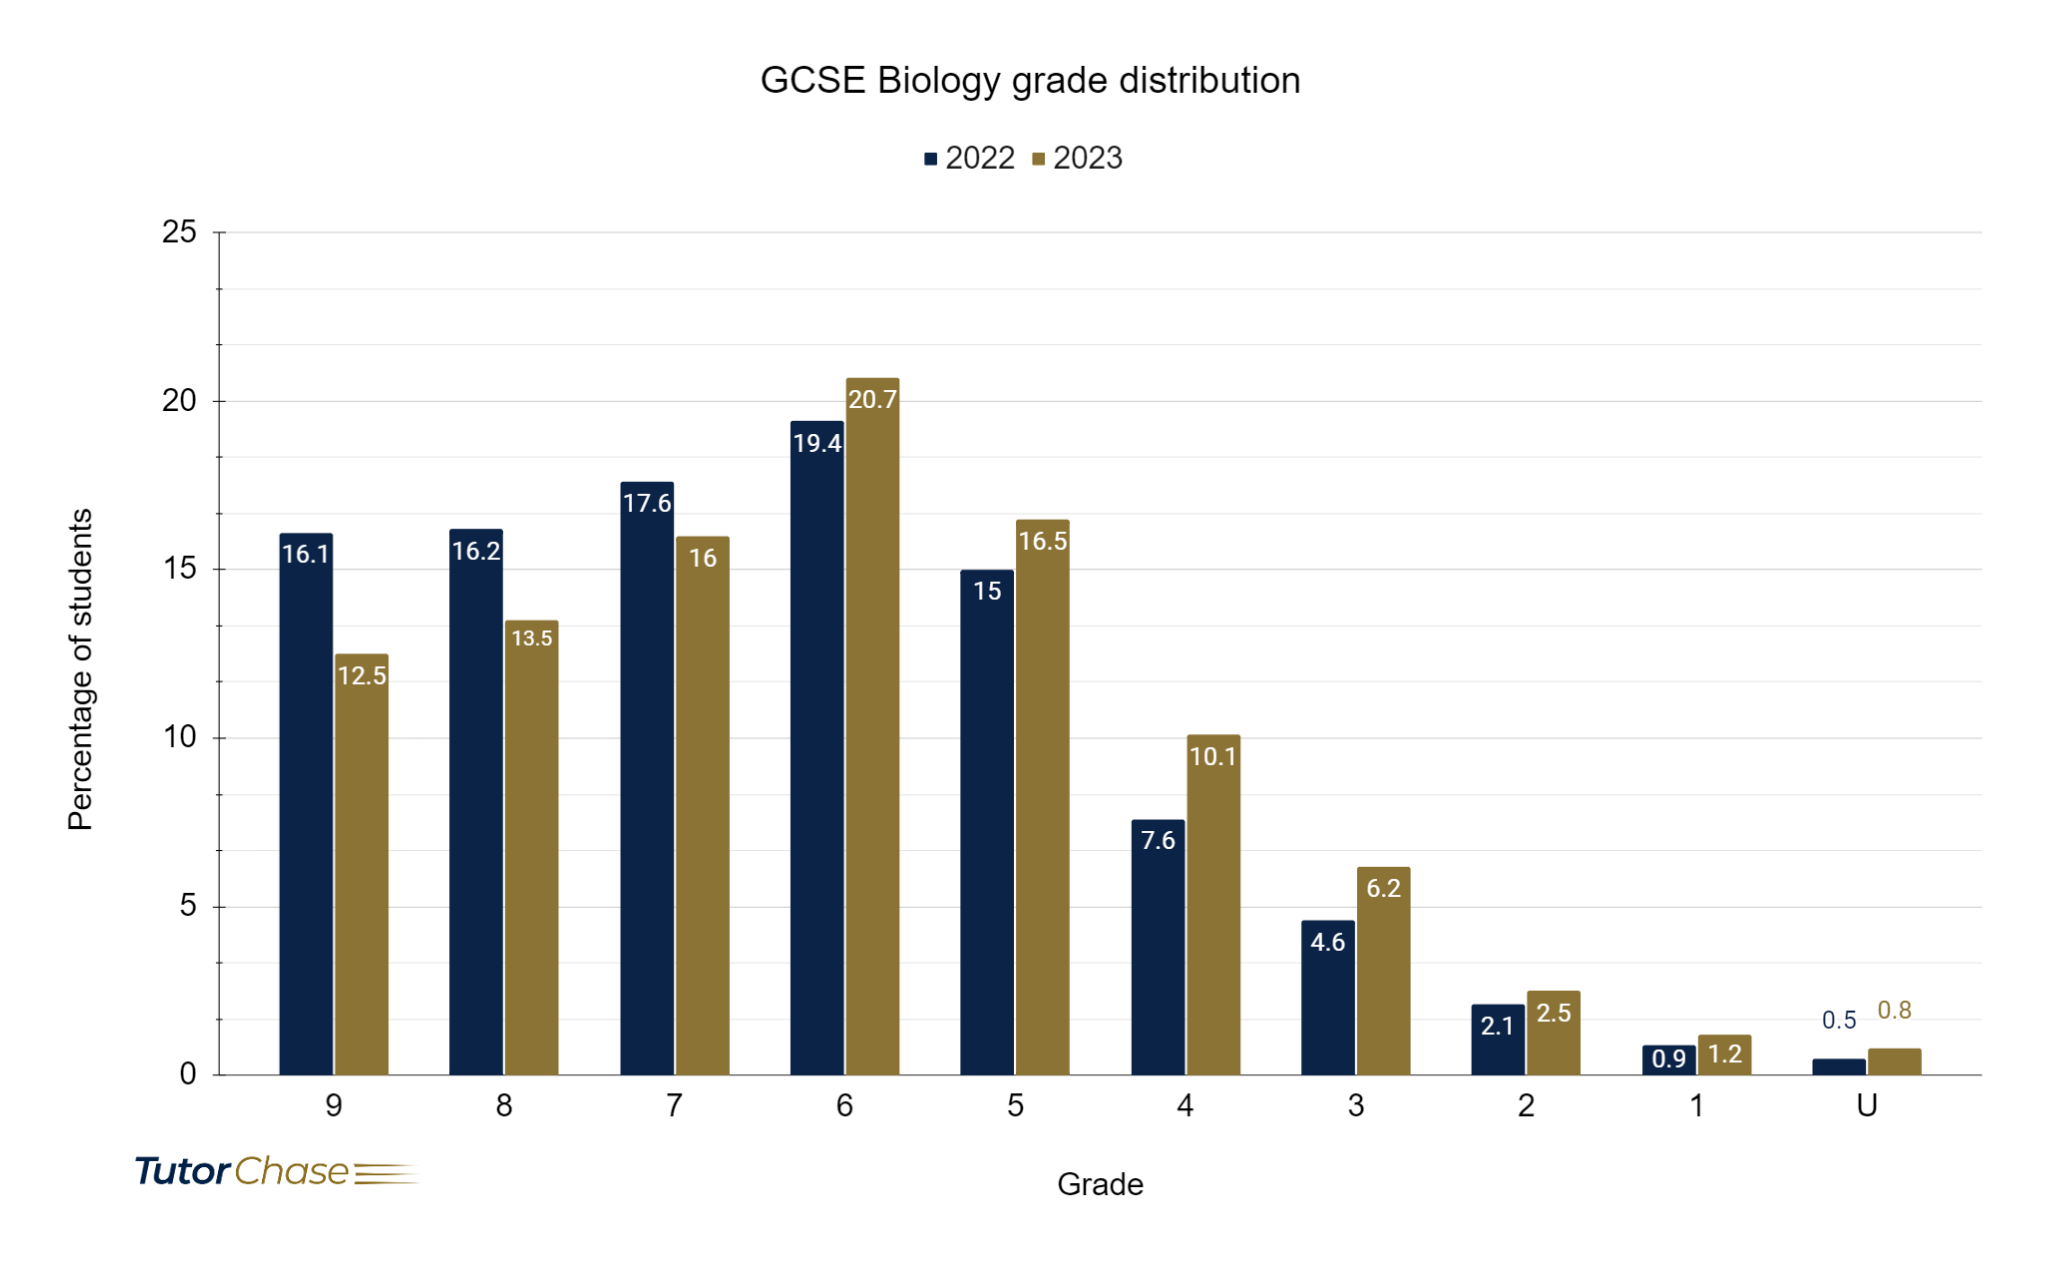 GCSE Biology grade distribution for 2022 and 2023